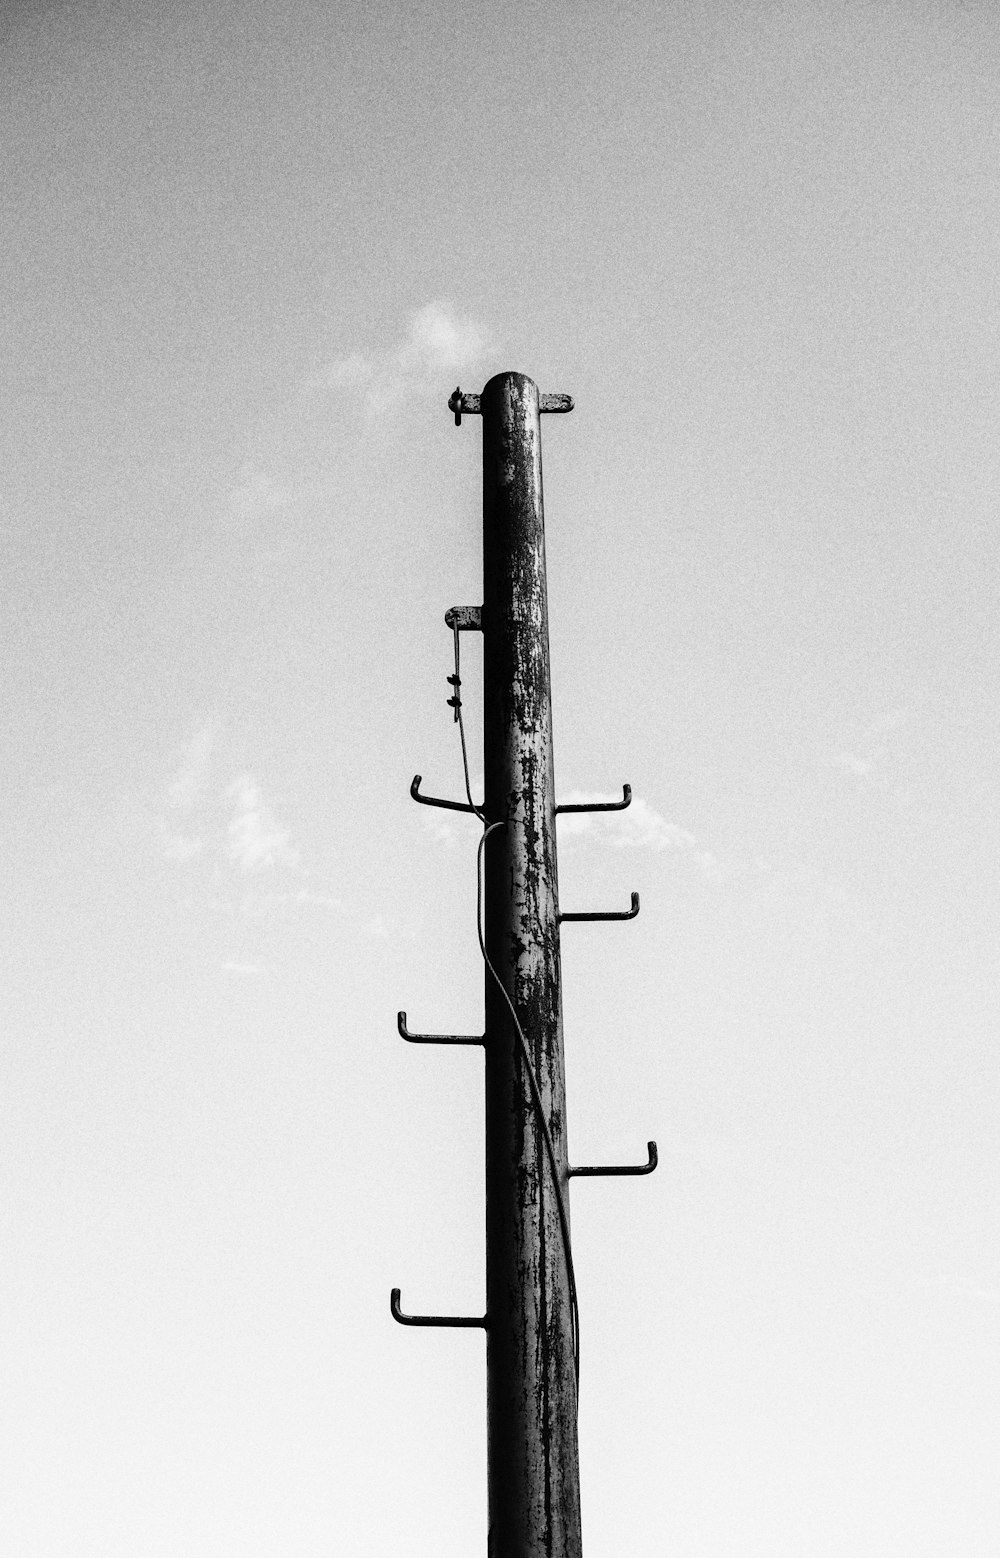 grayscale photo of utility pole